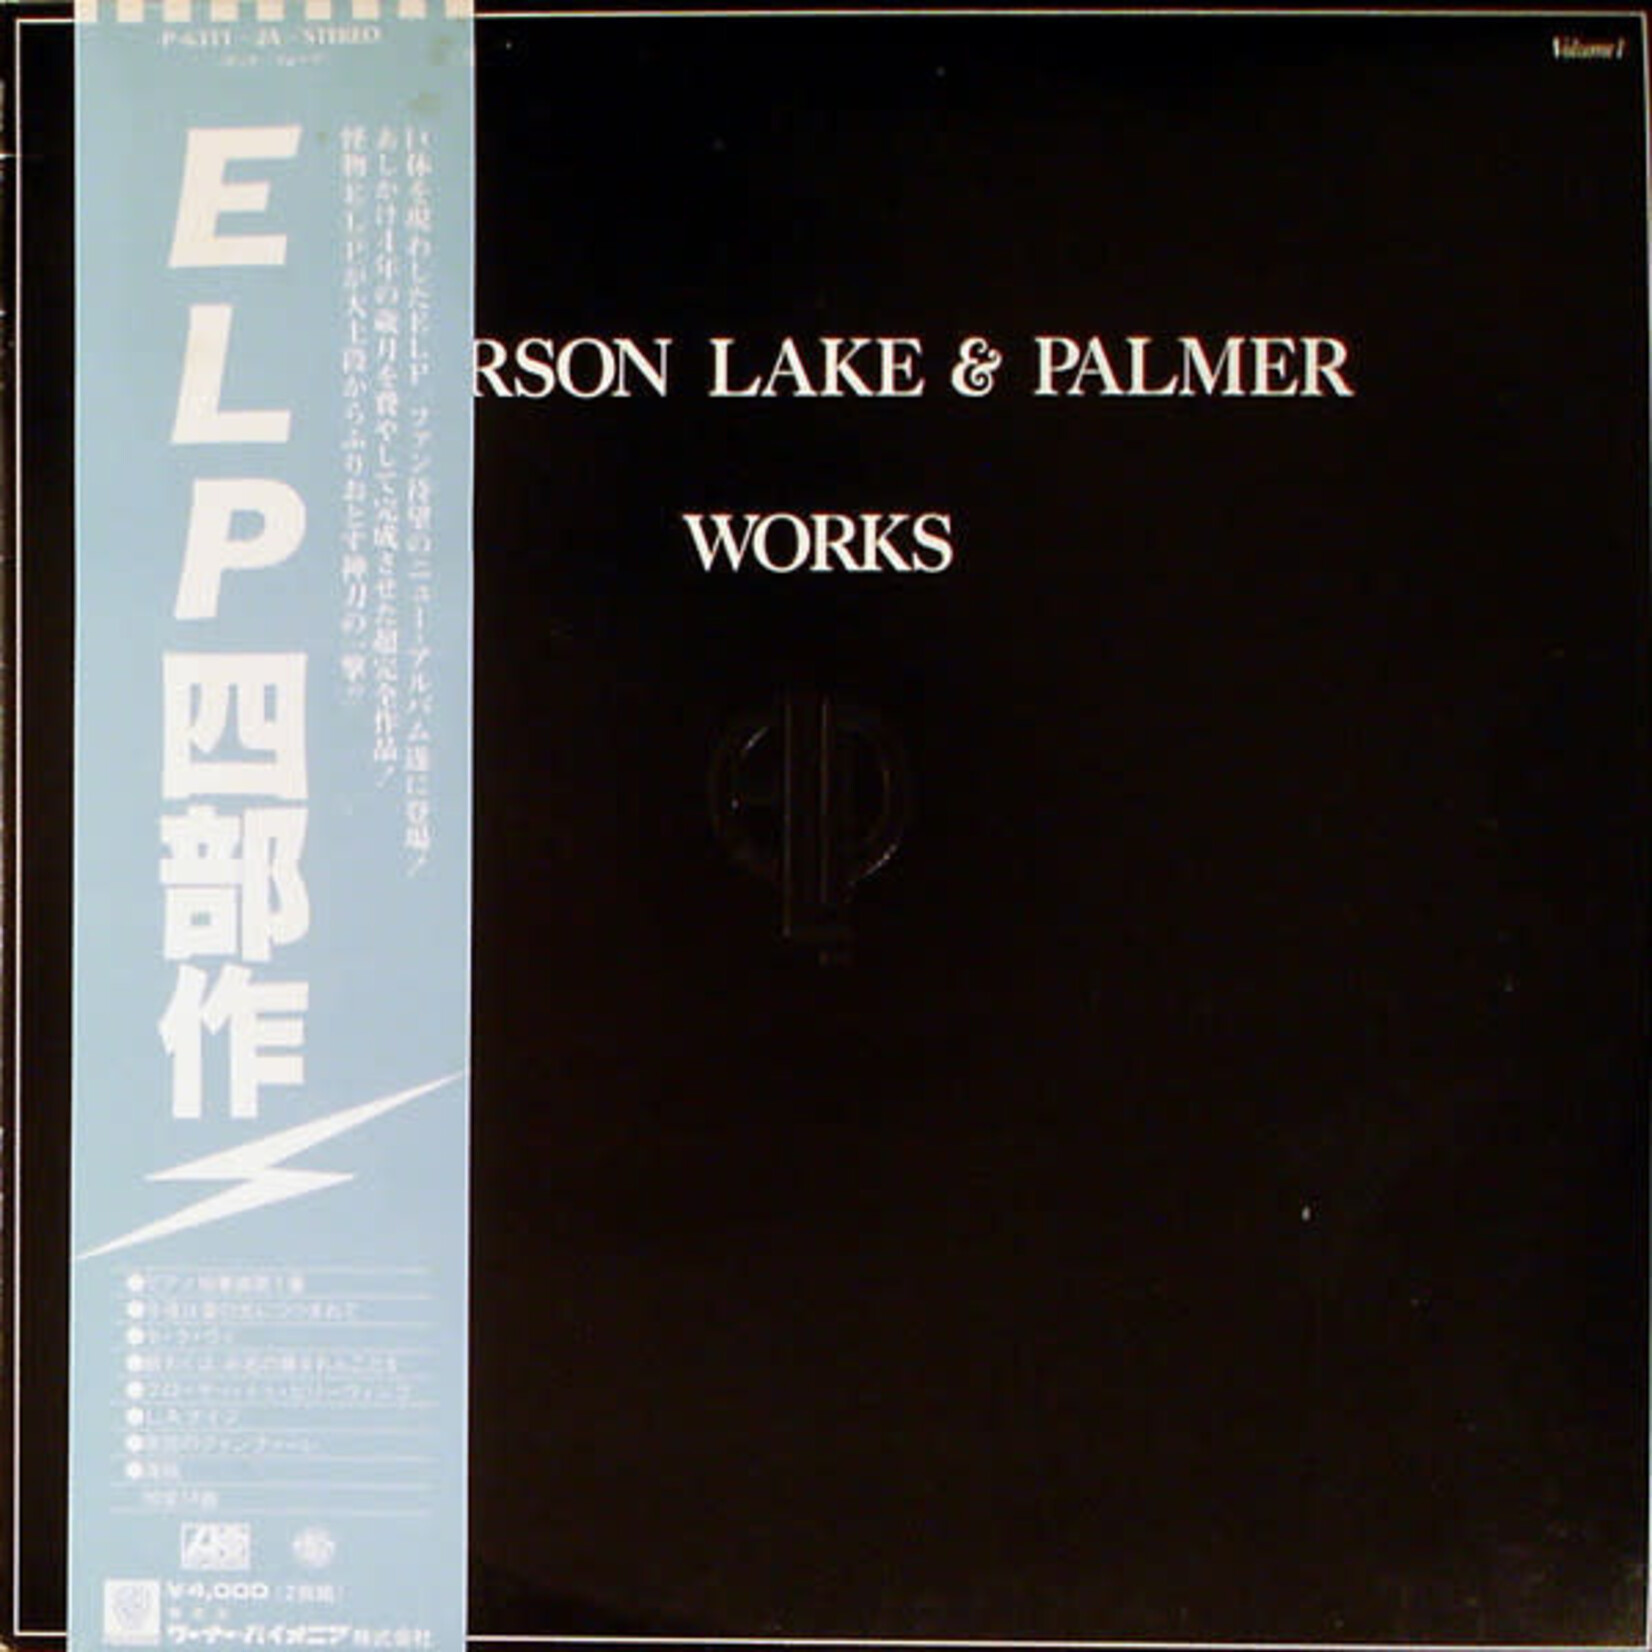 [Vintage] Emerson Lake & Palmer: Works Volume 1 W/OBI (2LP) [JAPANESE]